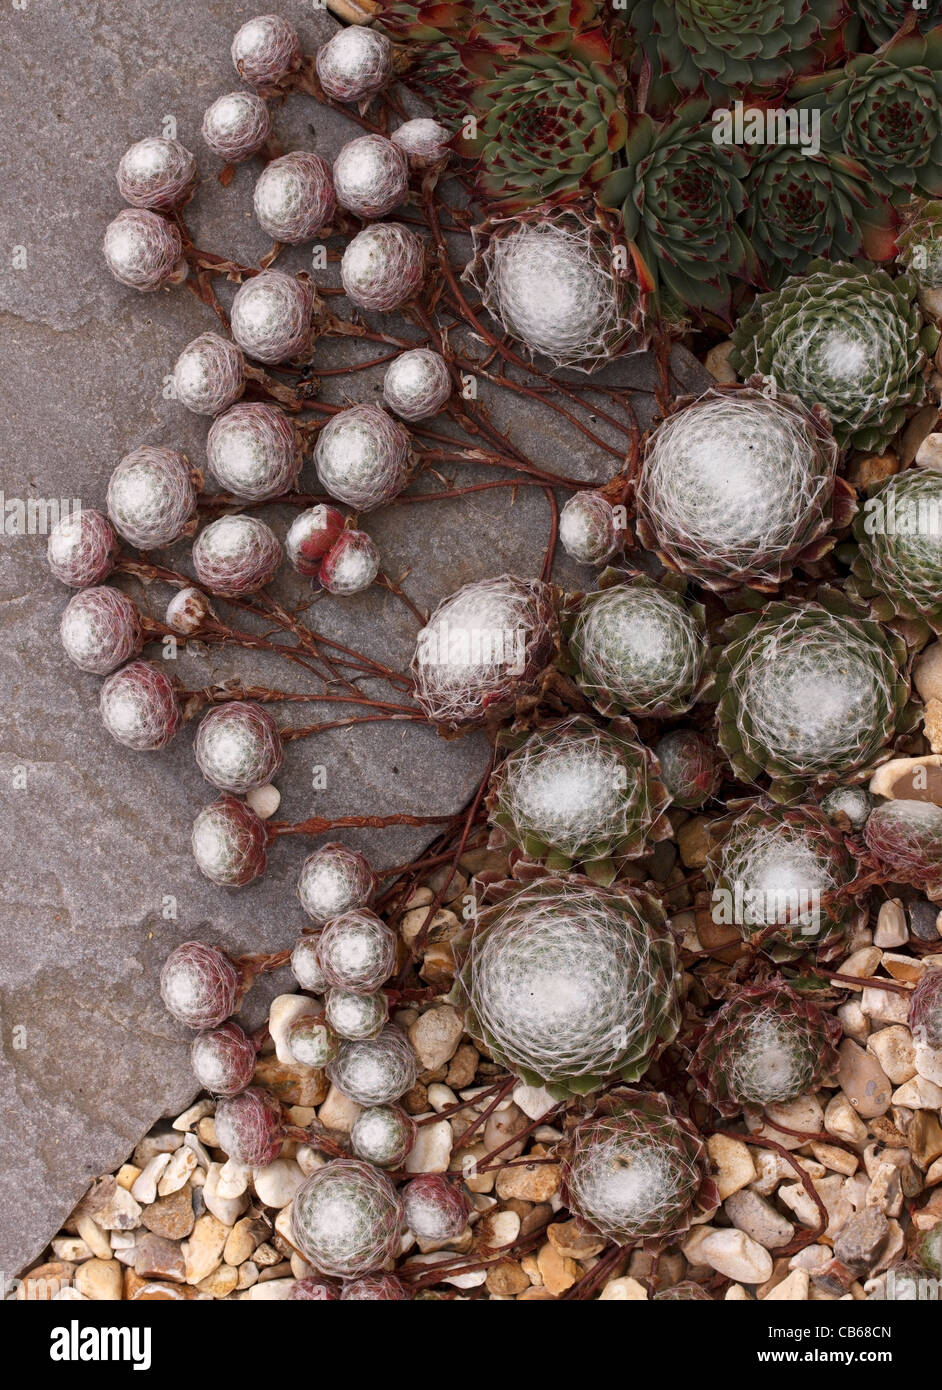 Sempervivum arachnoideum green Houseleek succulent plants with webbed rosettes growing over gravel and natural stone - closeup Stock Photo